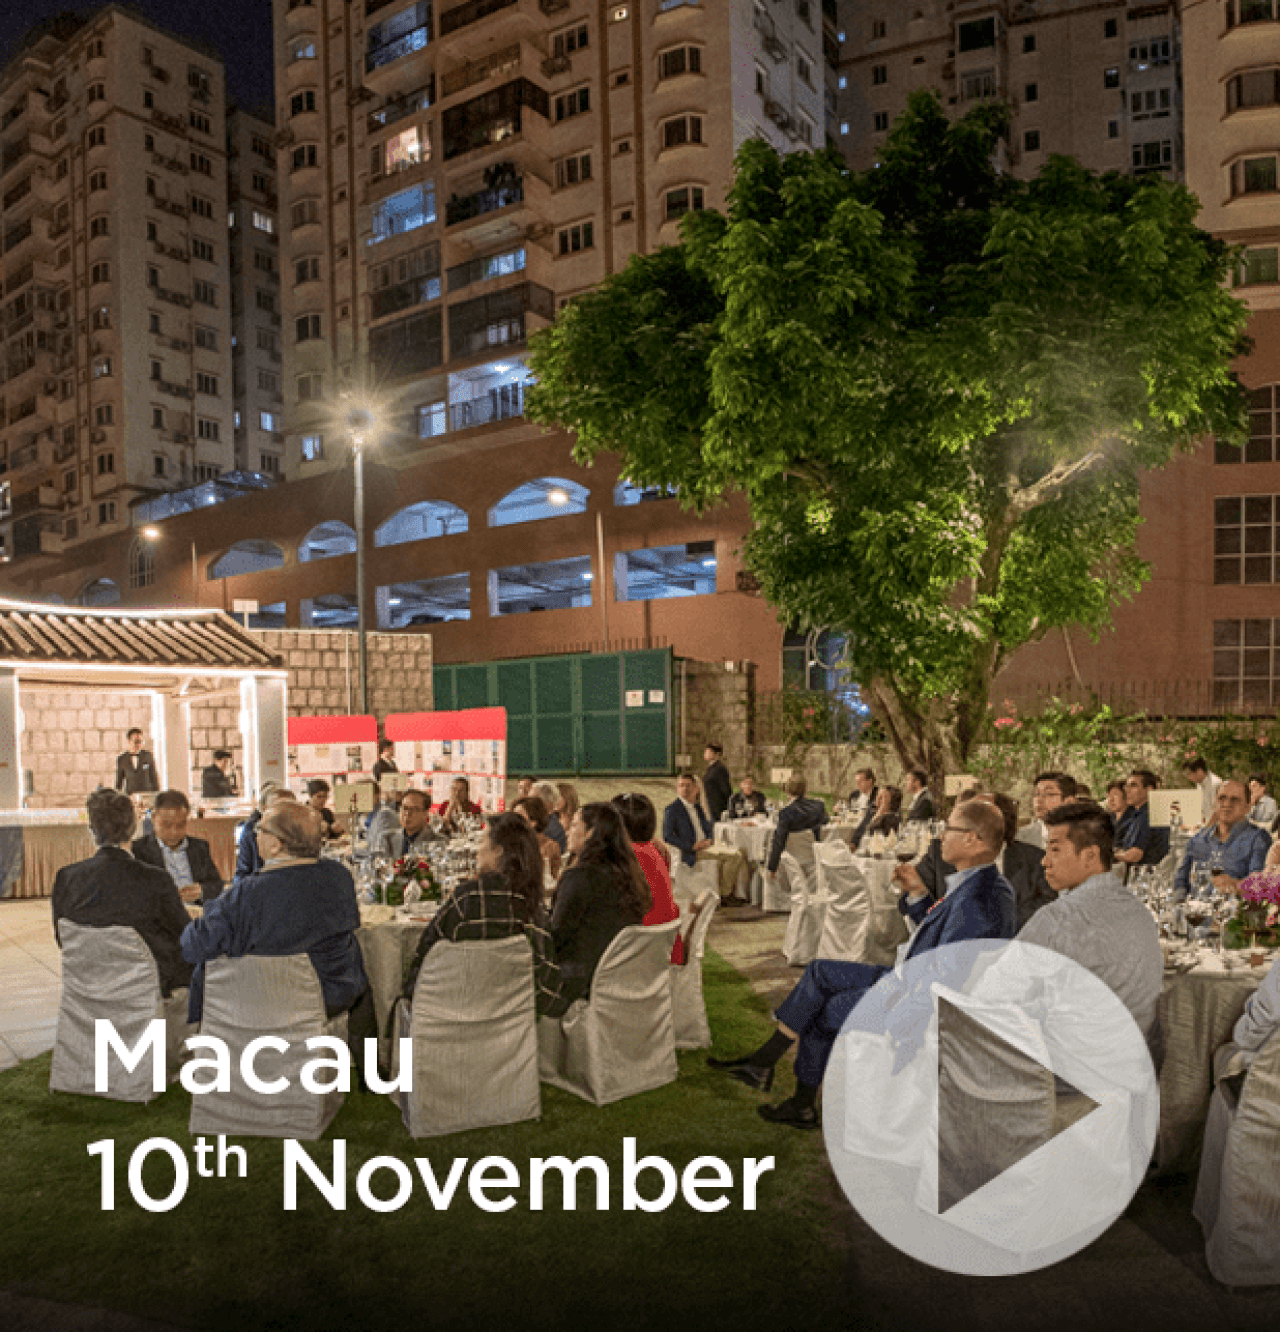 60th Anniversary Macau video | Hovione